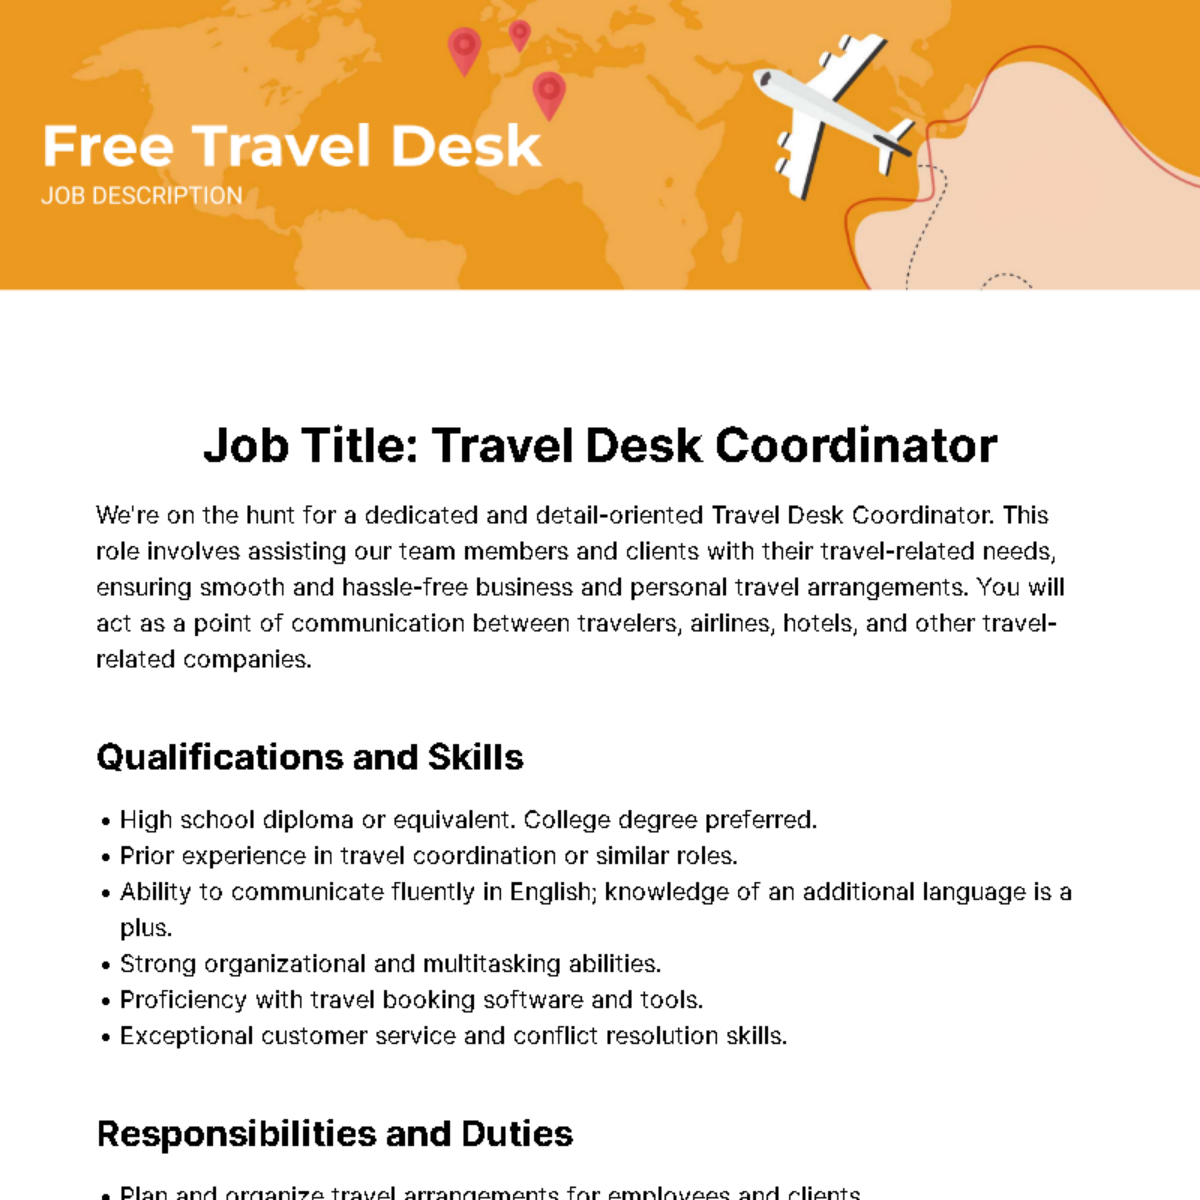 Free Travel Desk Job Description Template